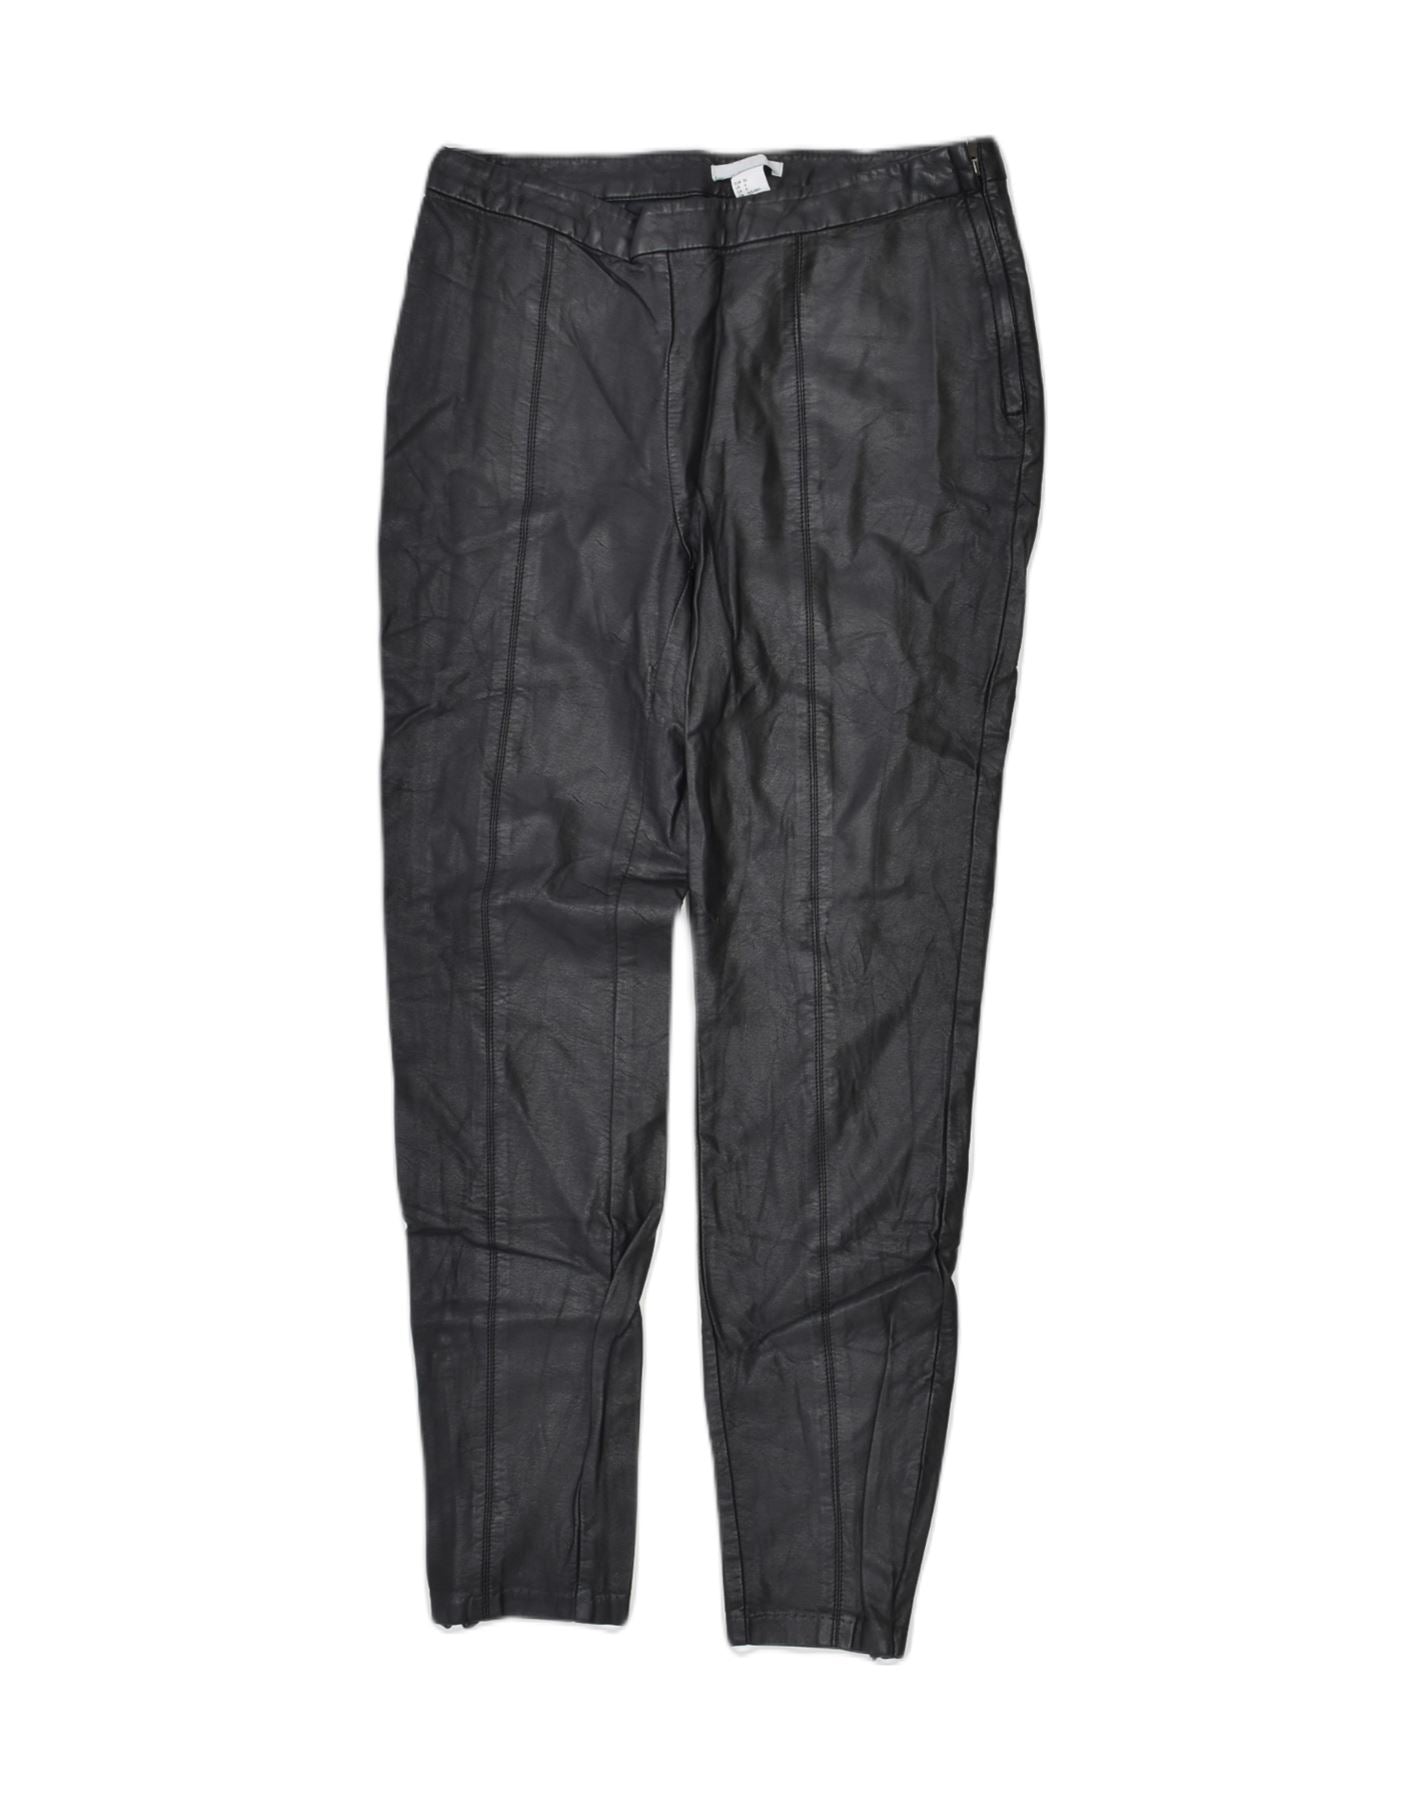 H&M Womens Faux Leather Leggings US 6 Medium W28 L26 Black Viscose, Vintage & Second-Hand Clothing Online